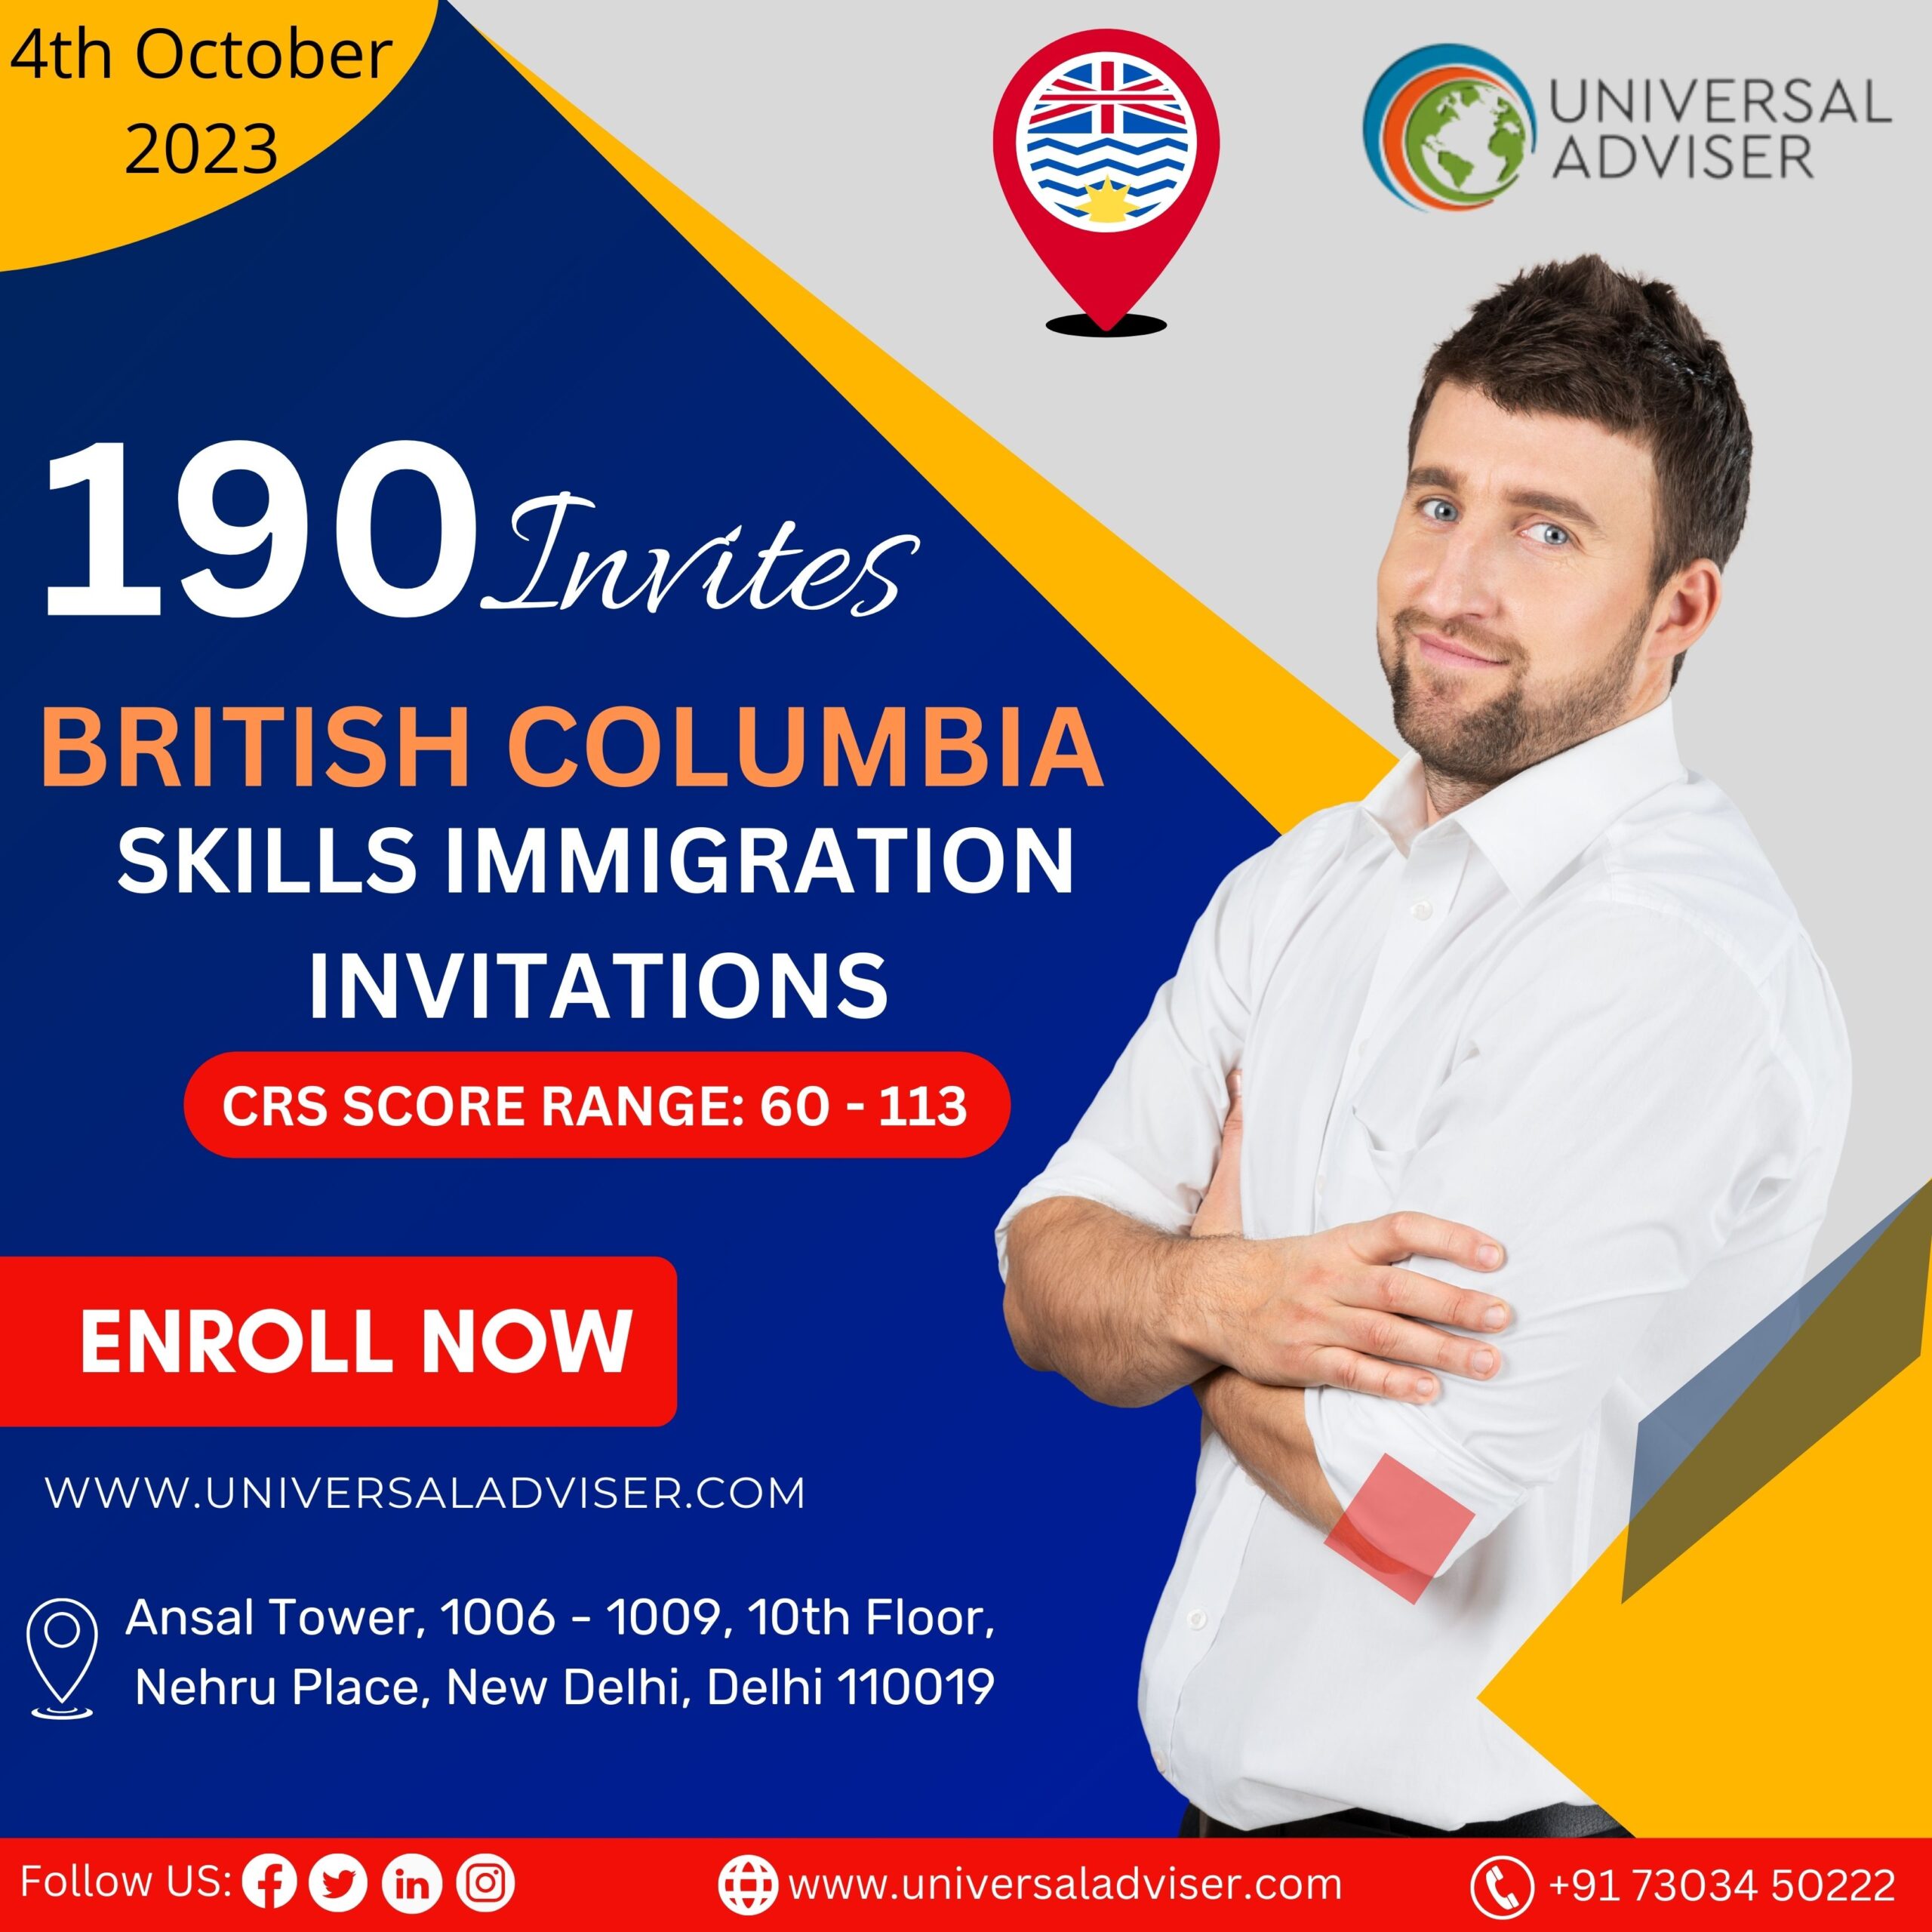 British Columbia Issues 190 Invitations in Latest Skills Immigration Draw